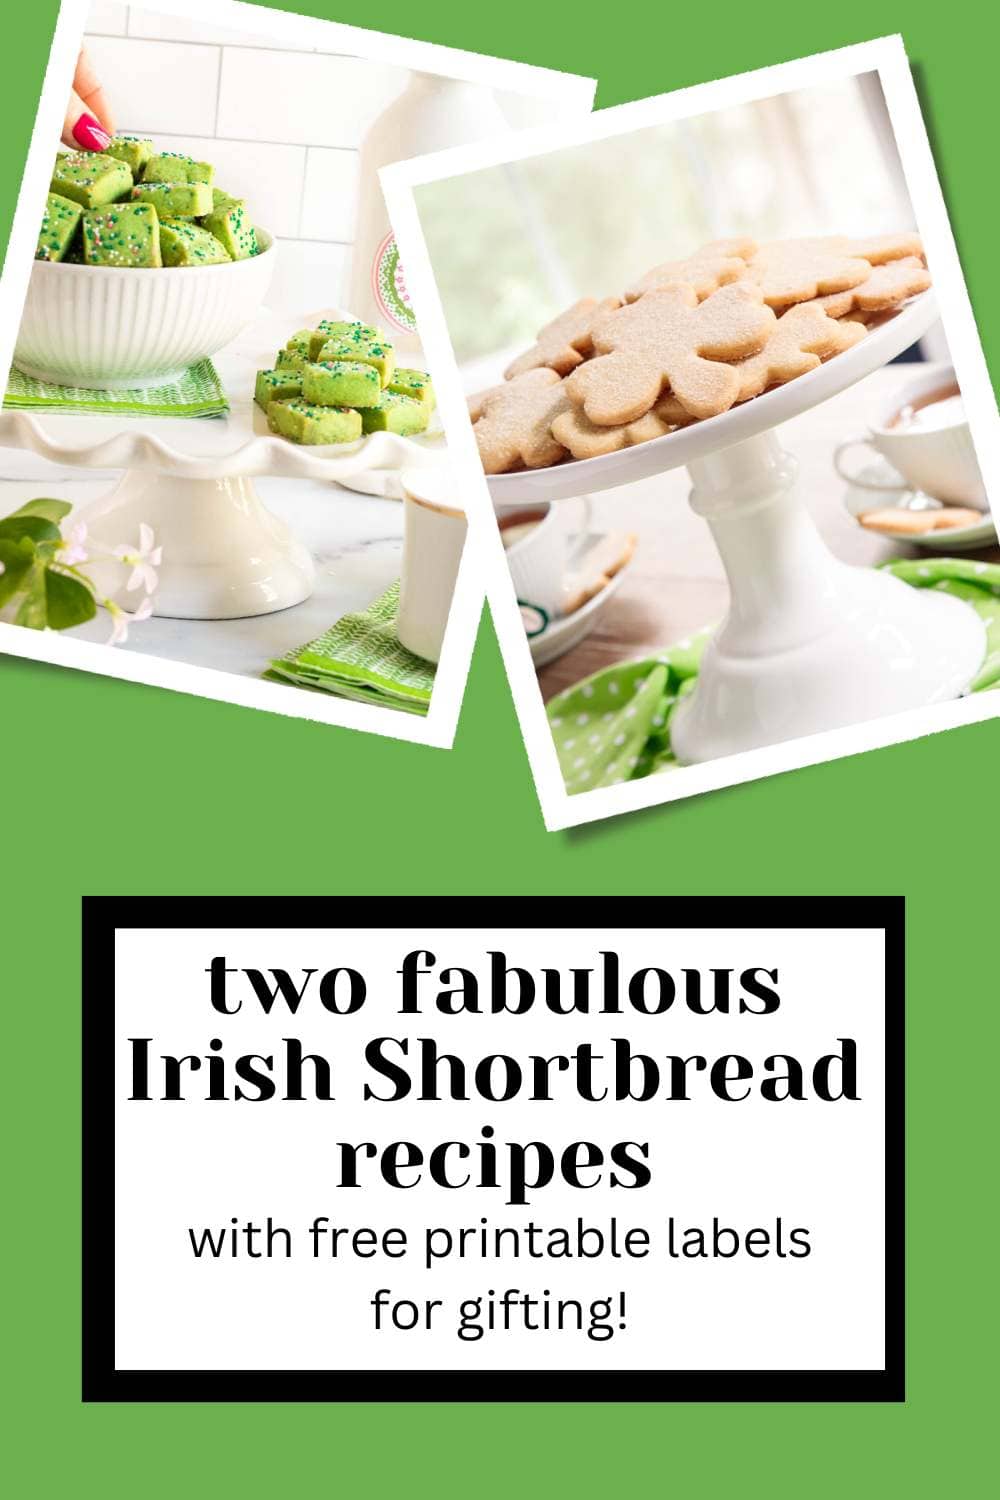 Sham-Rock Your World With These Fabulous Irish Shortbread Recipes